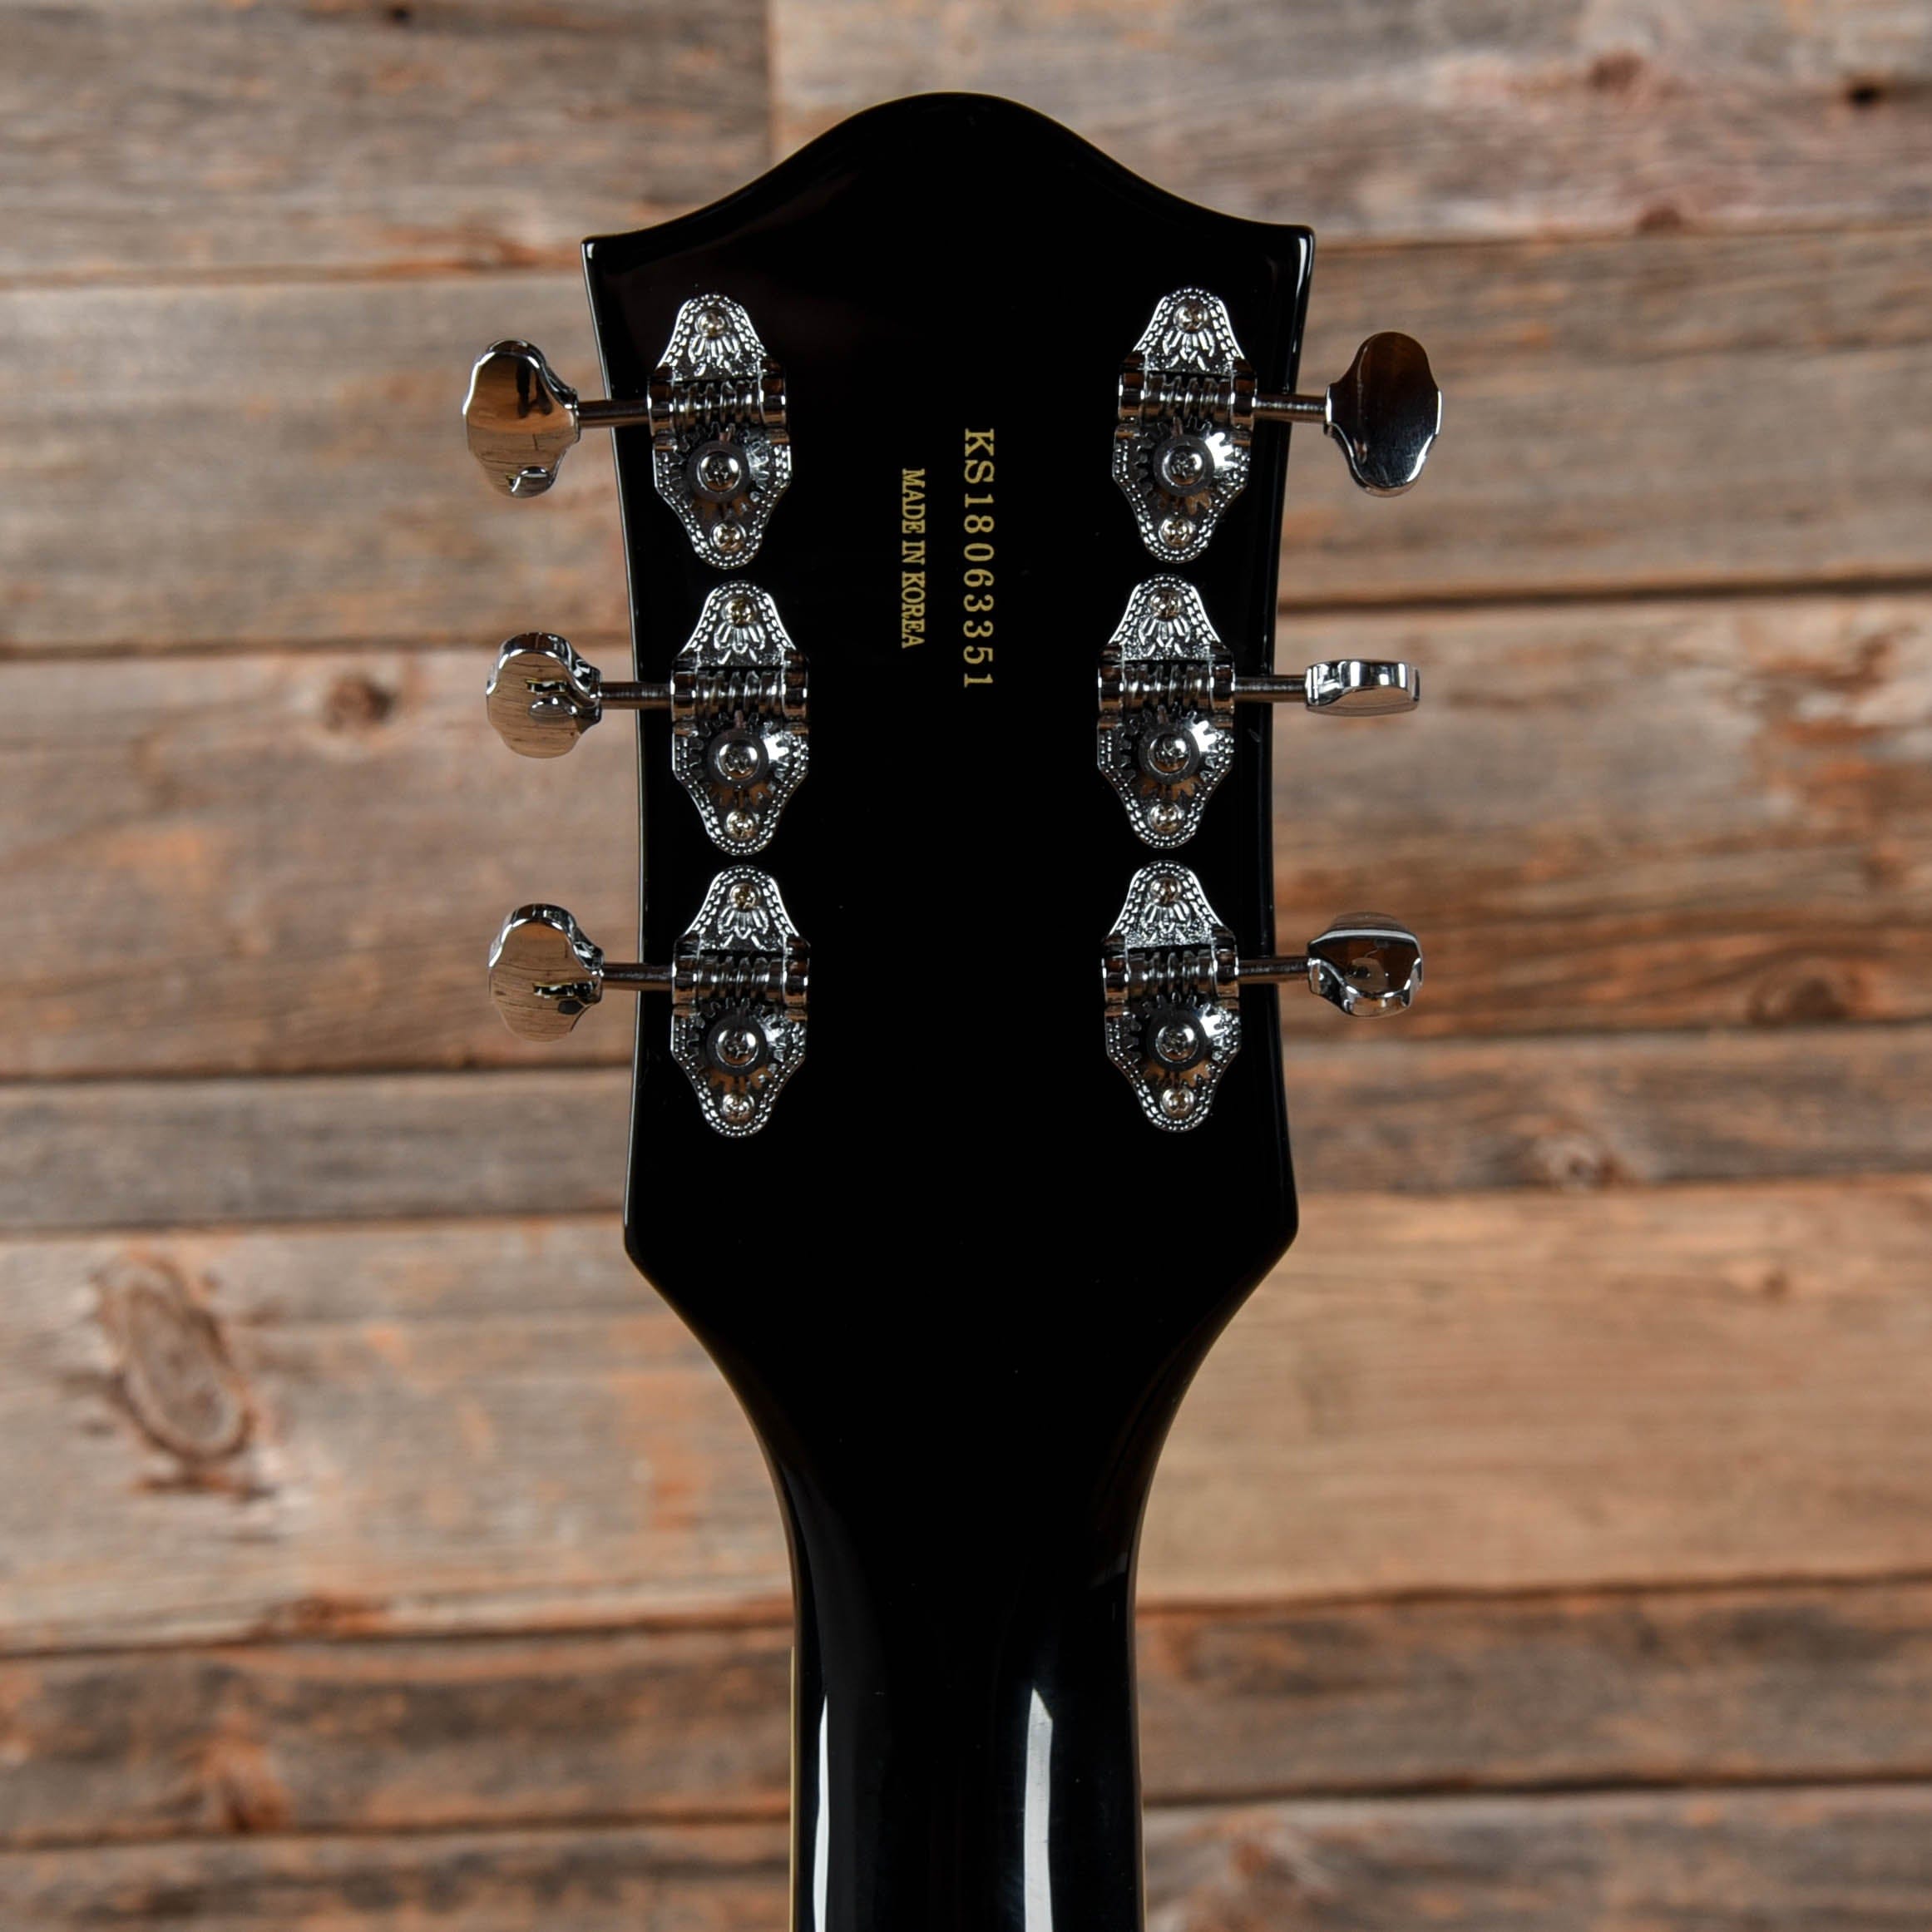 Gretsch G5422T Electromatic Hollowbody Double-Cut Black 2018 Electric Guitars / Hollow Body